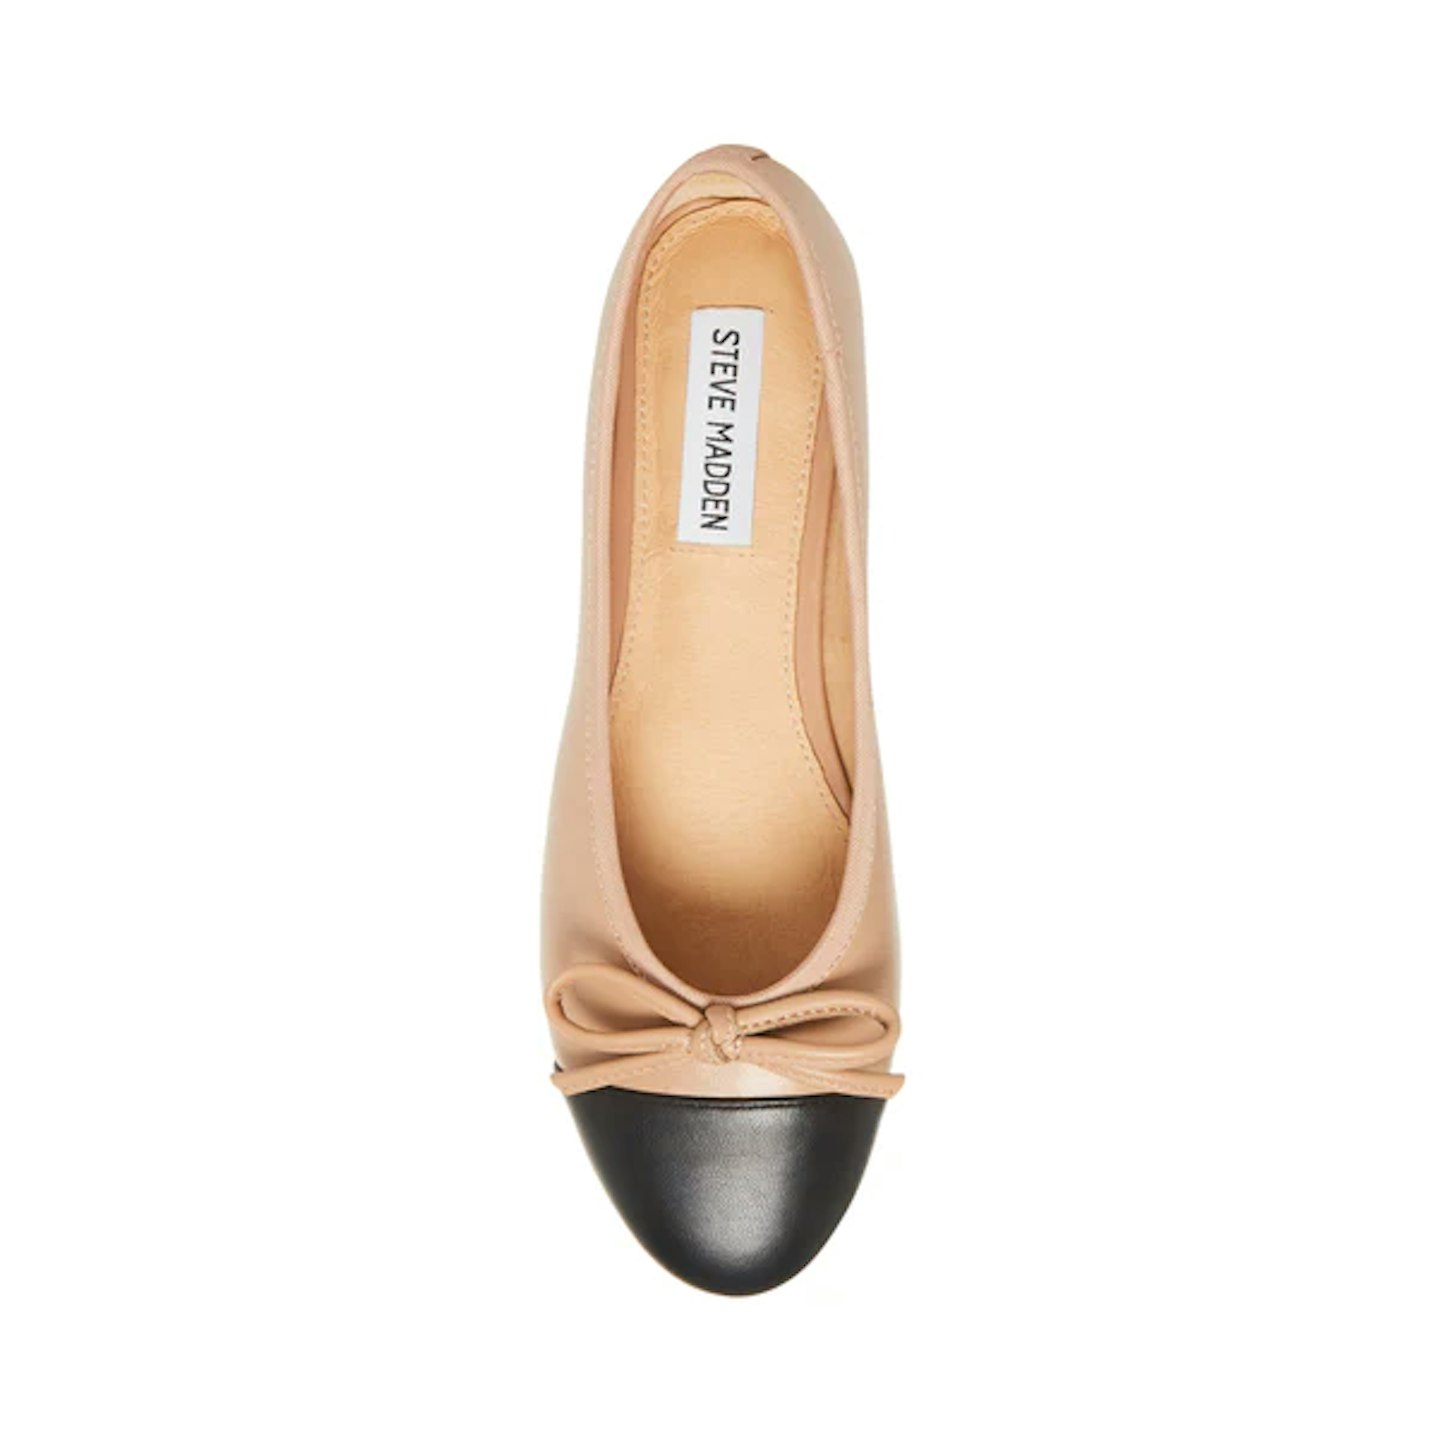 Chanel ballet flat dupe: M&S £39.50 leather pumps look designer